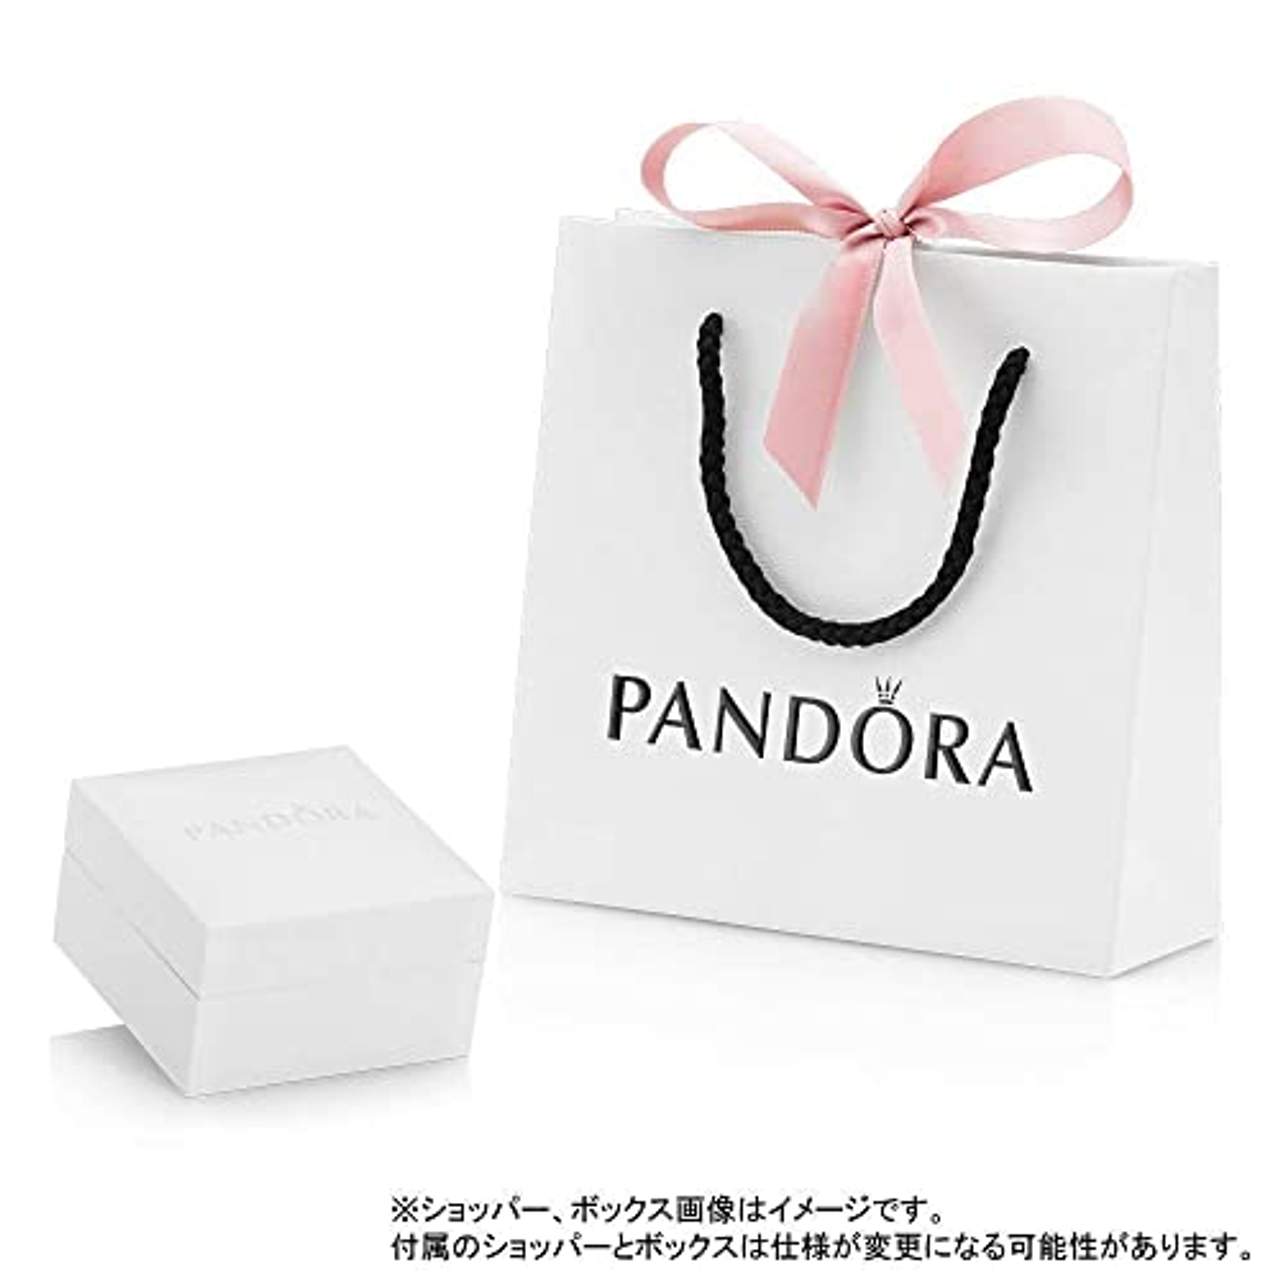 Pandora -Charm Träger 925_Sterling_Silber 